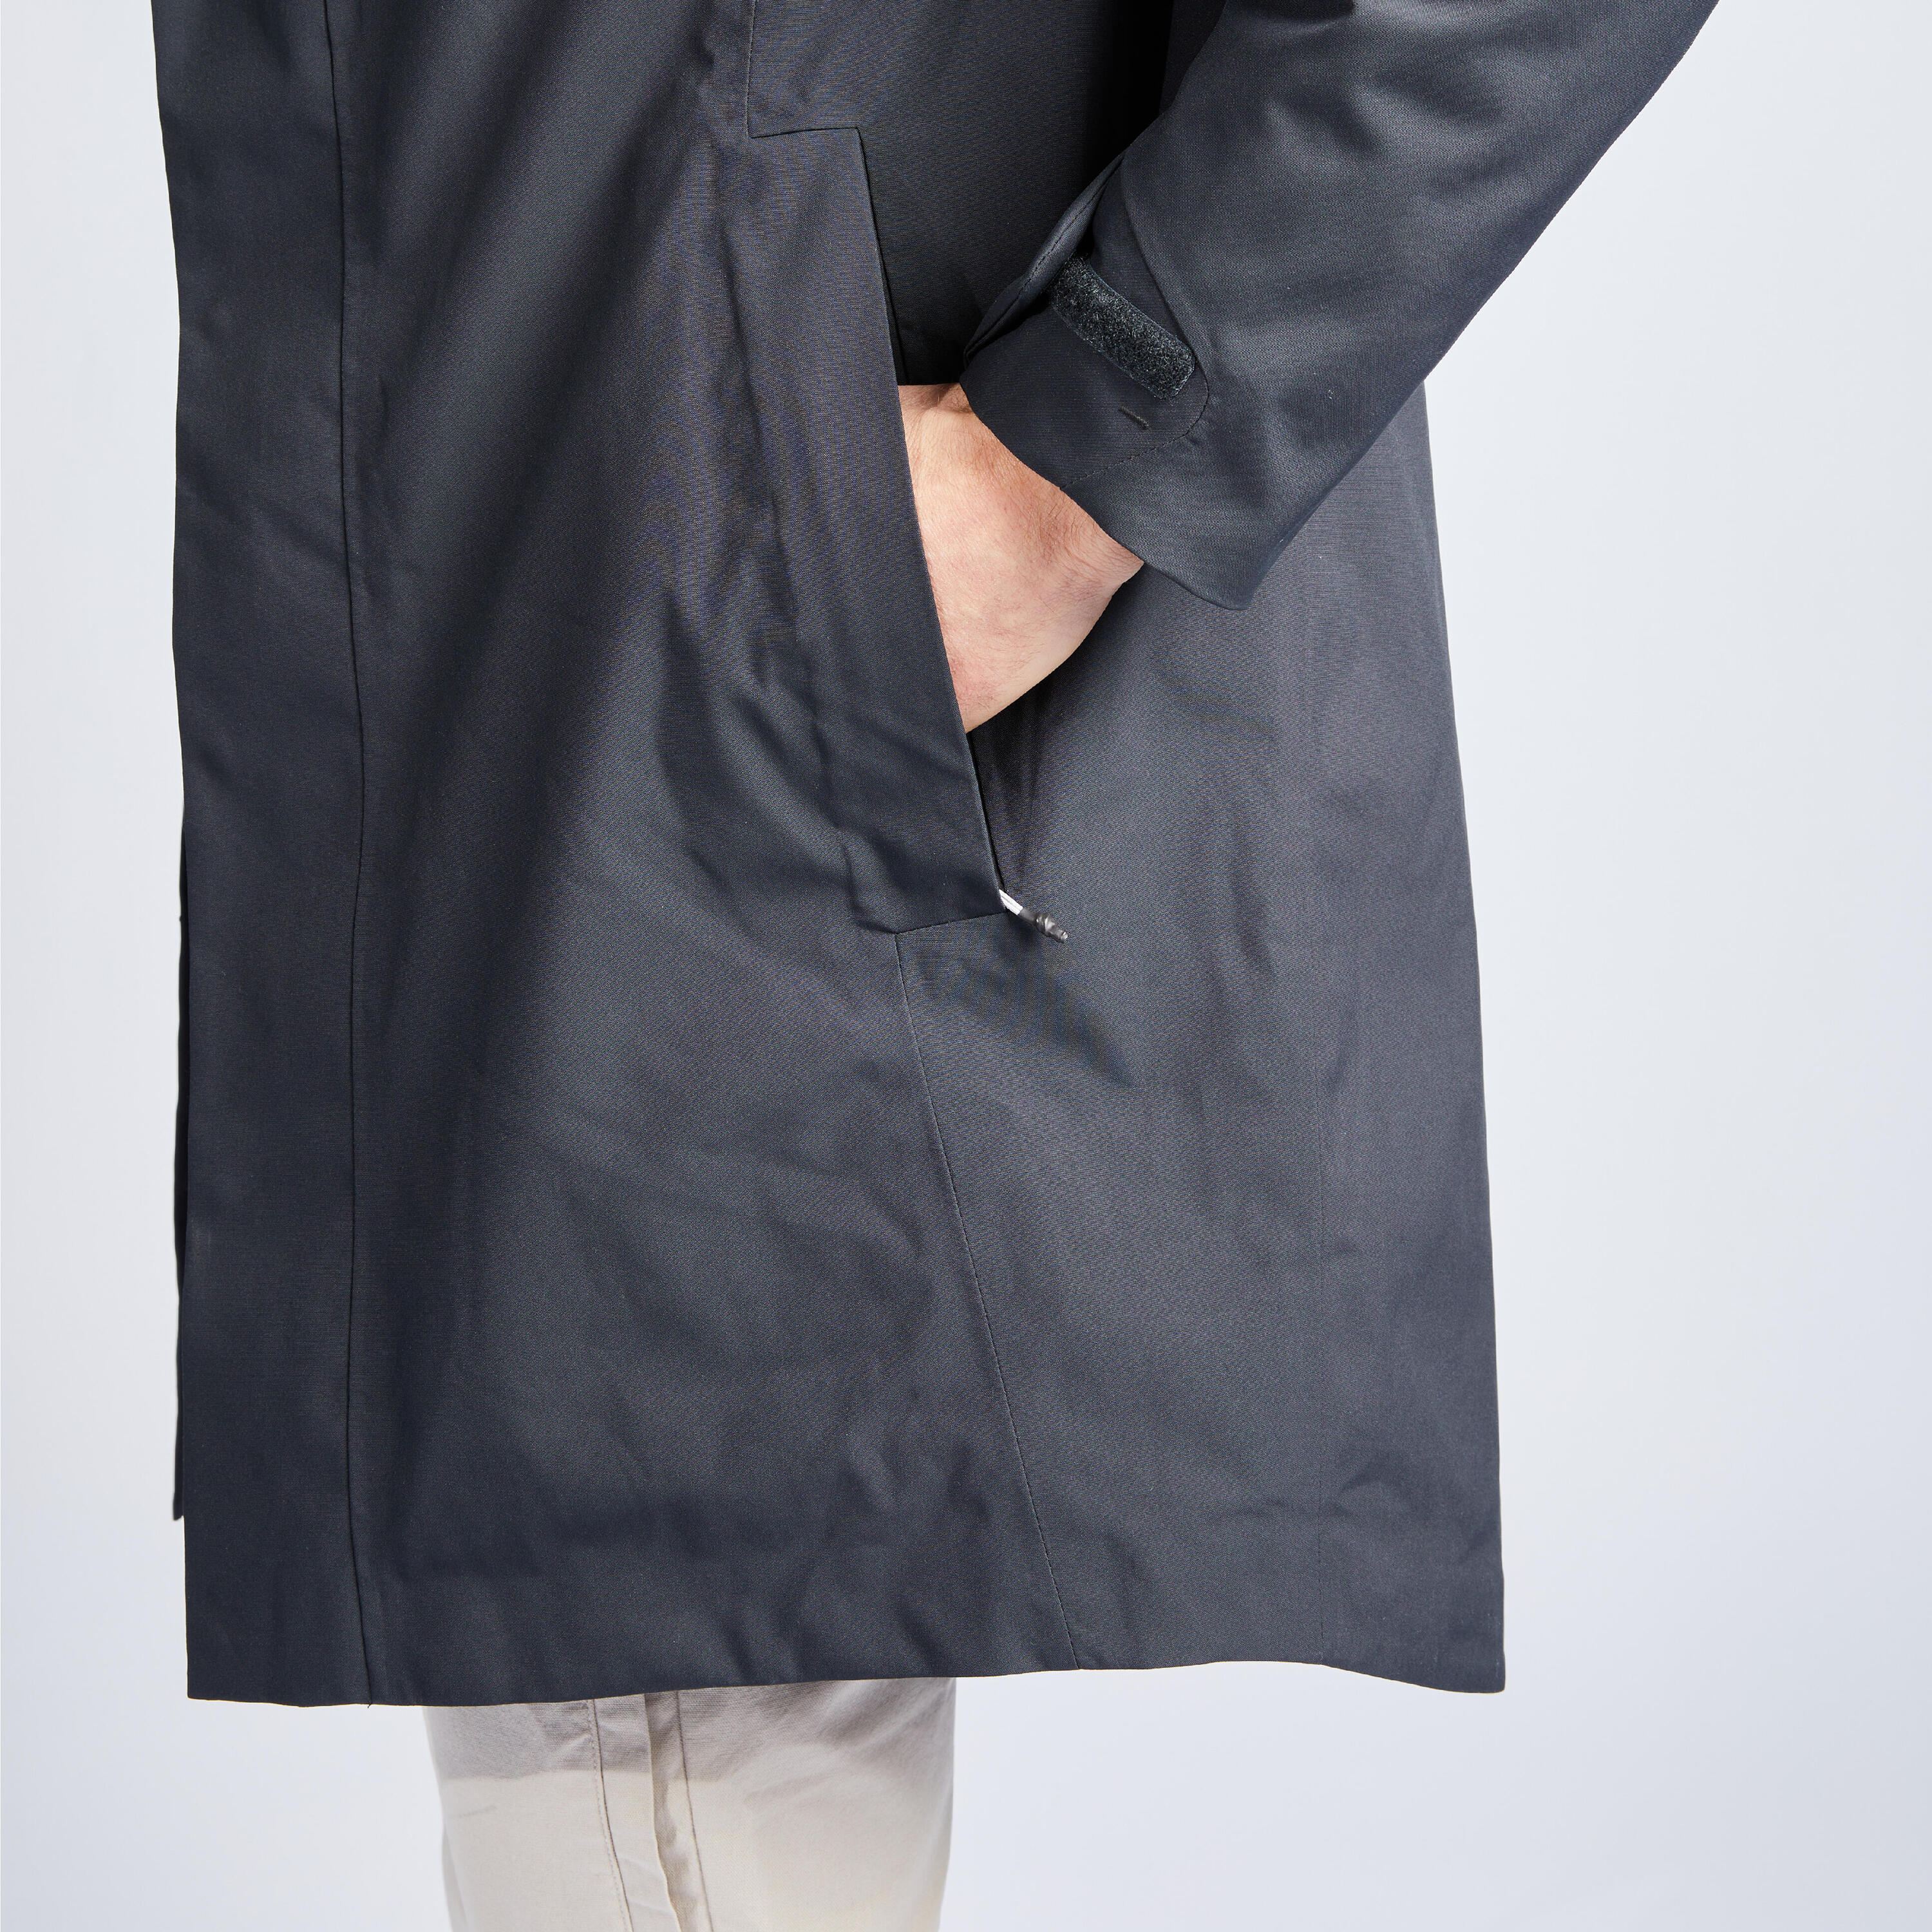 Men's warm waterproof windproof sailing jacket - SAILING 300 Dark grey 7/13